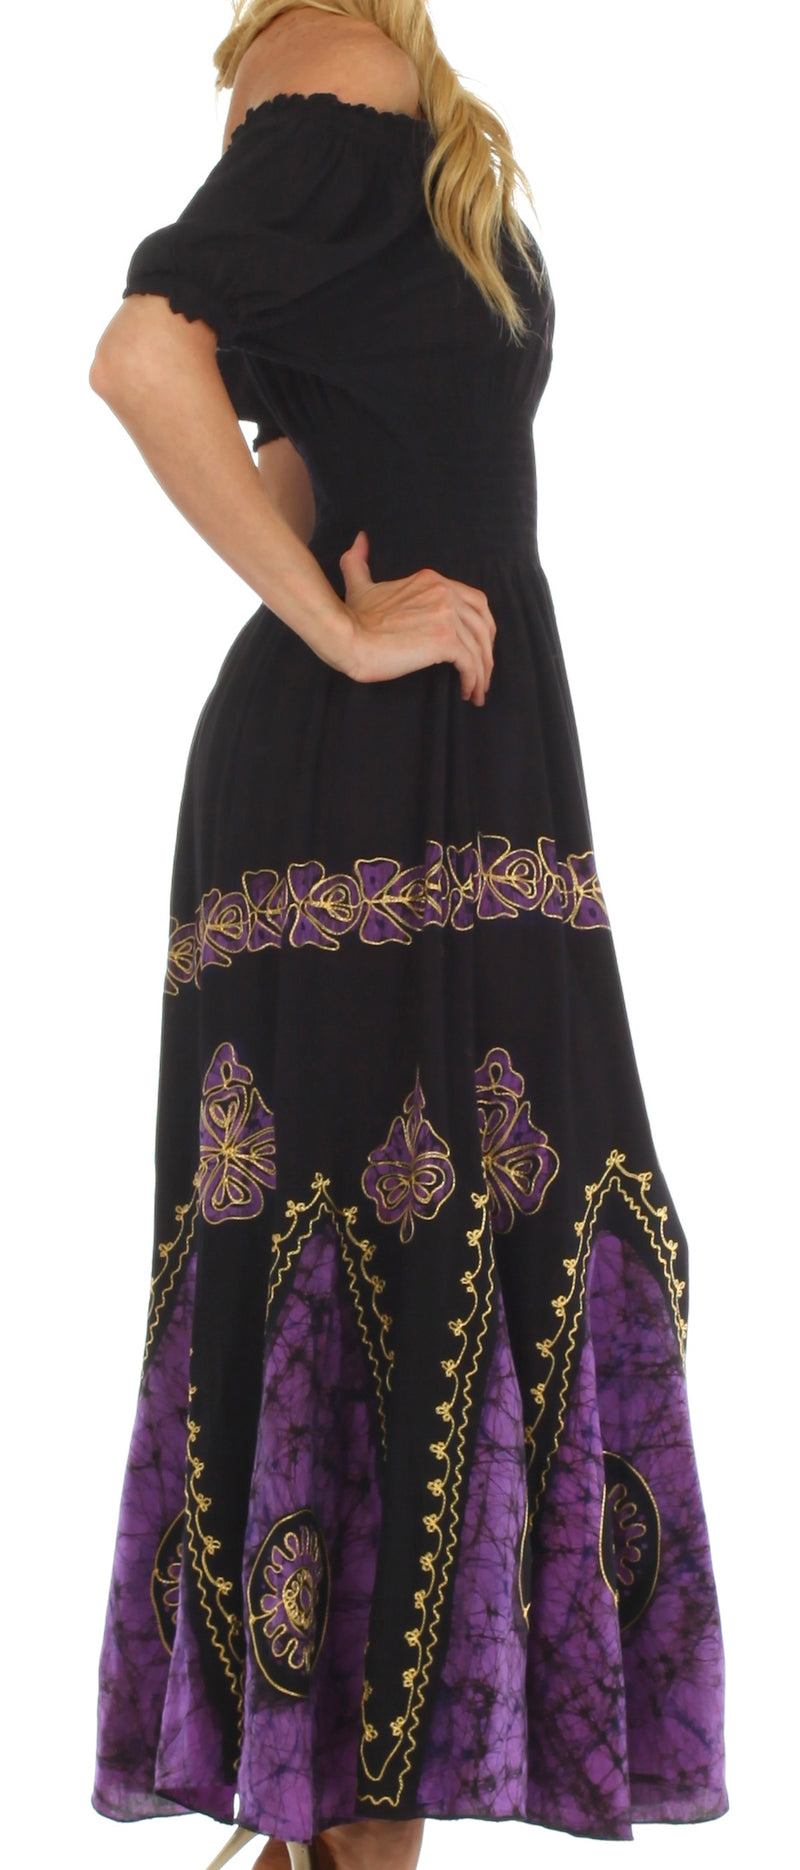 Sakkas Batik Sunshine Peasant Dress